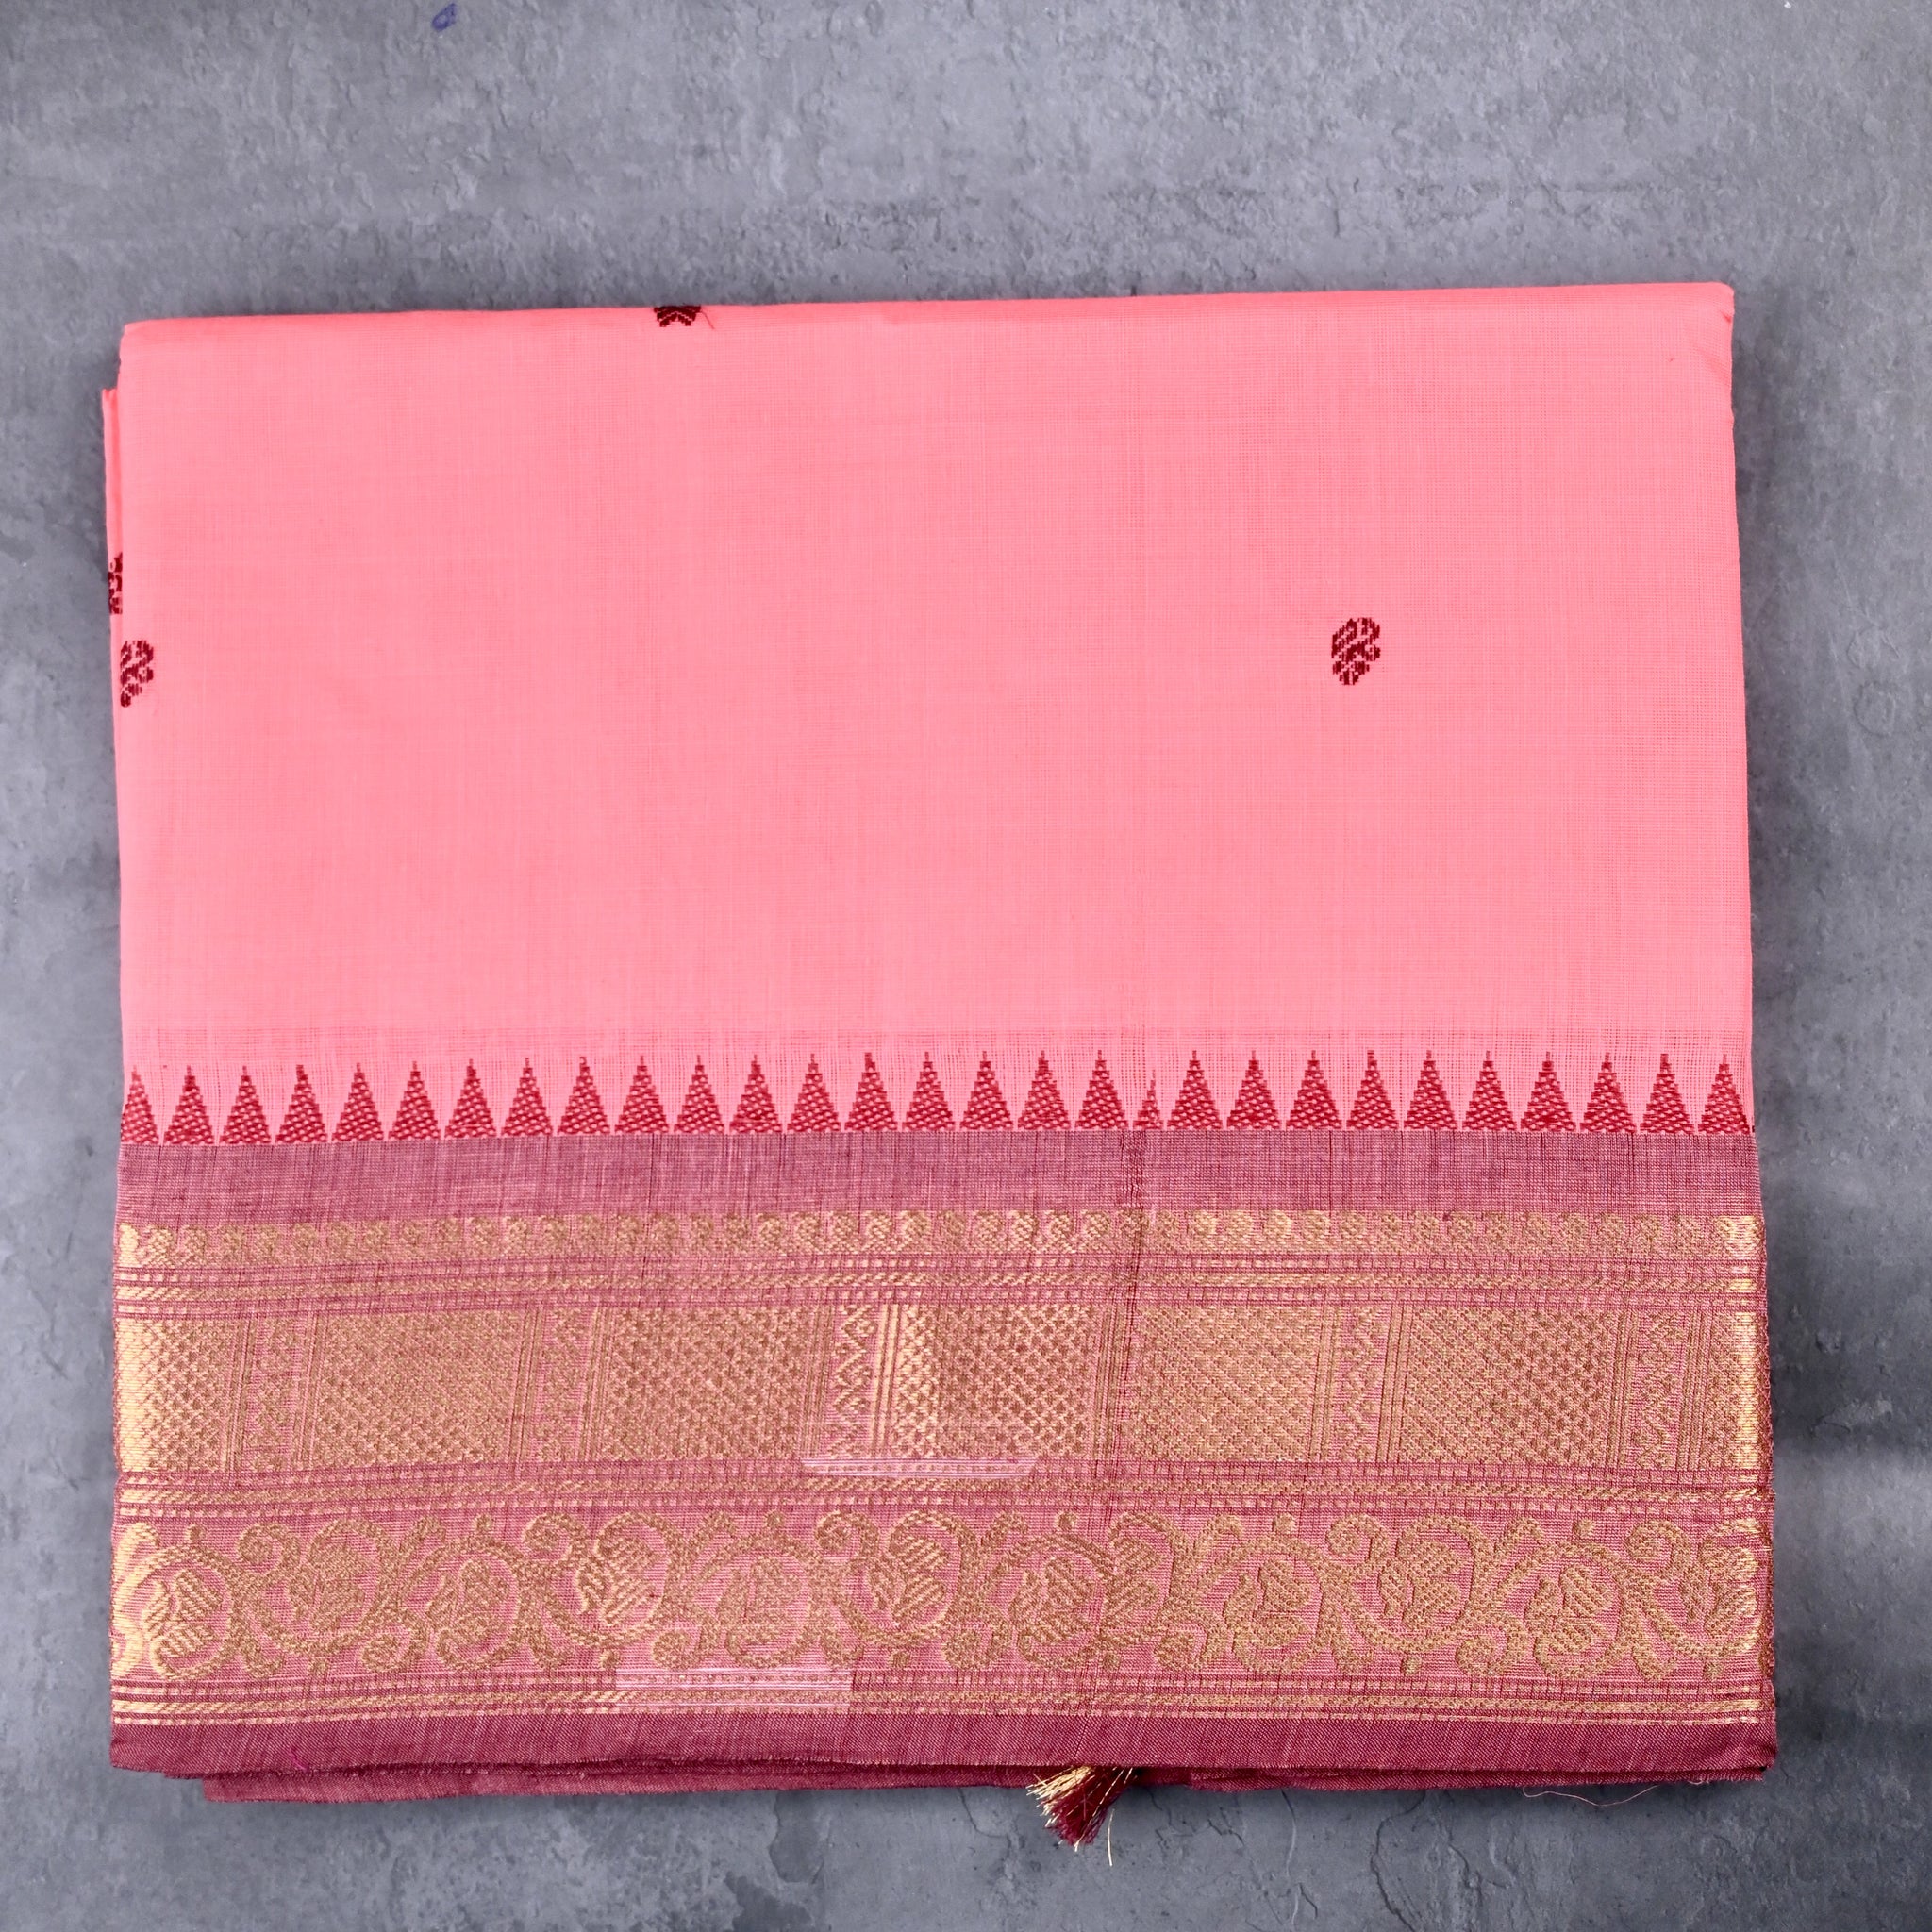 Kanchi cotton saree baby pink color with motives, running pallu, big zari border and plain blouse.